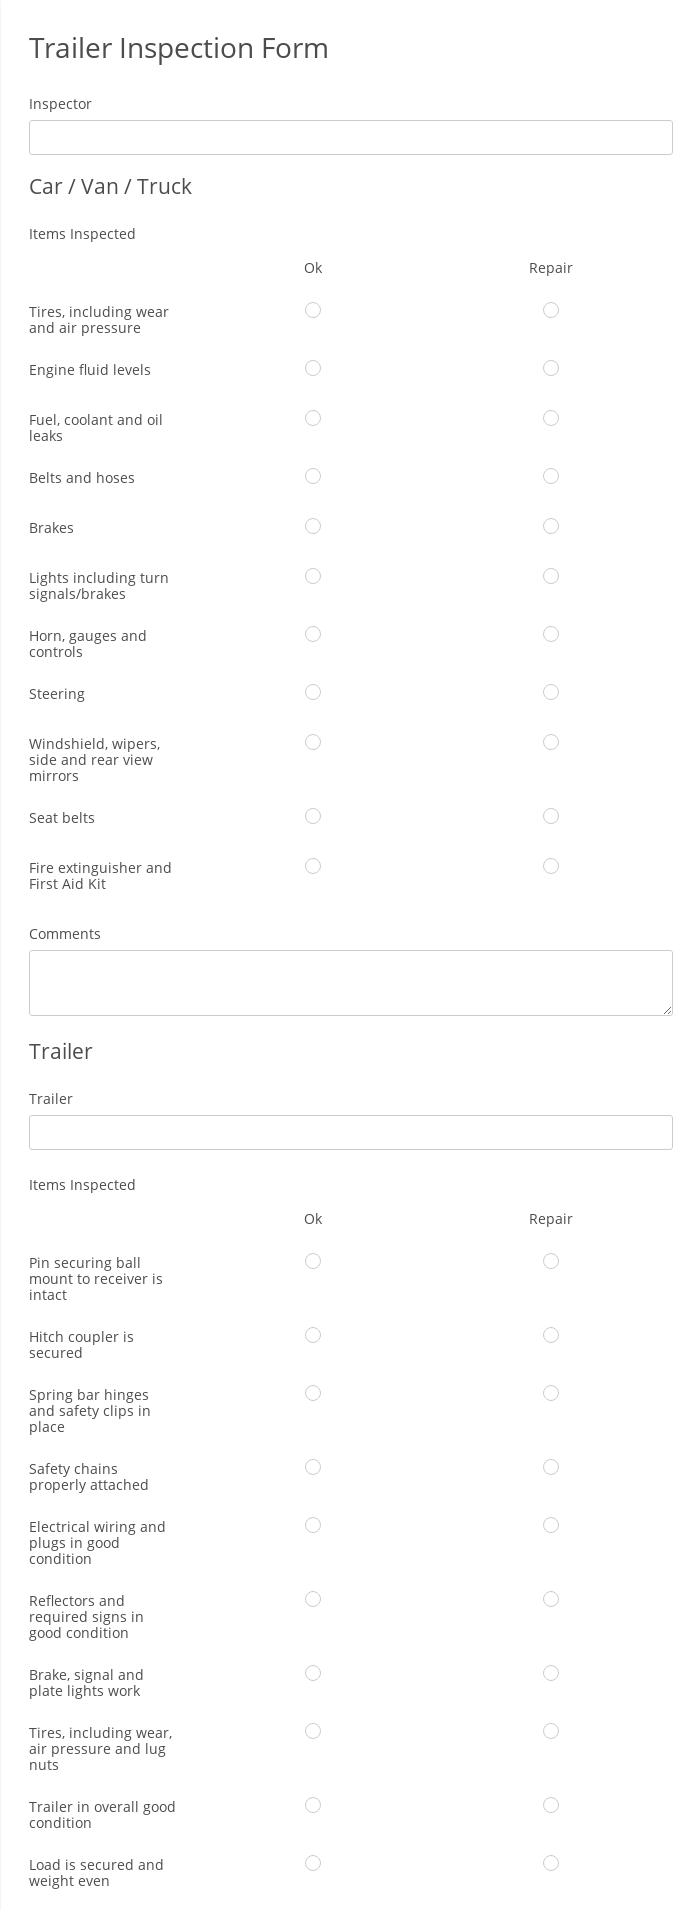 Trailer Inspection Form